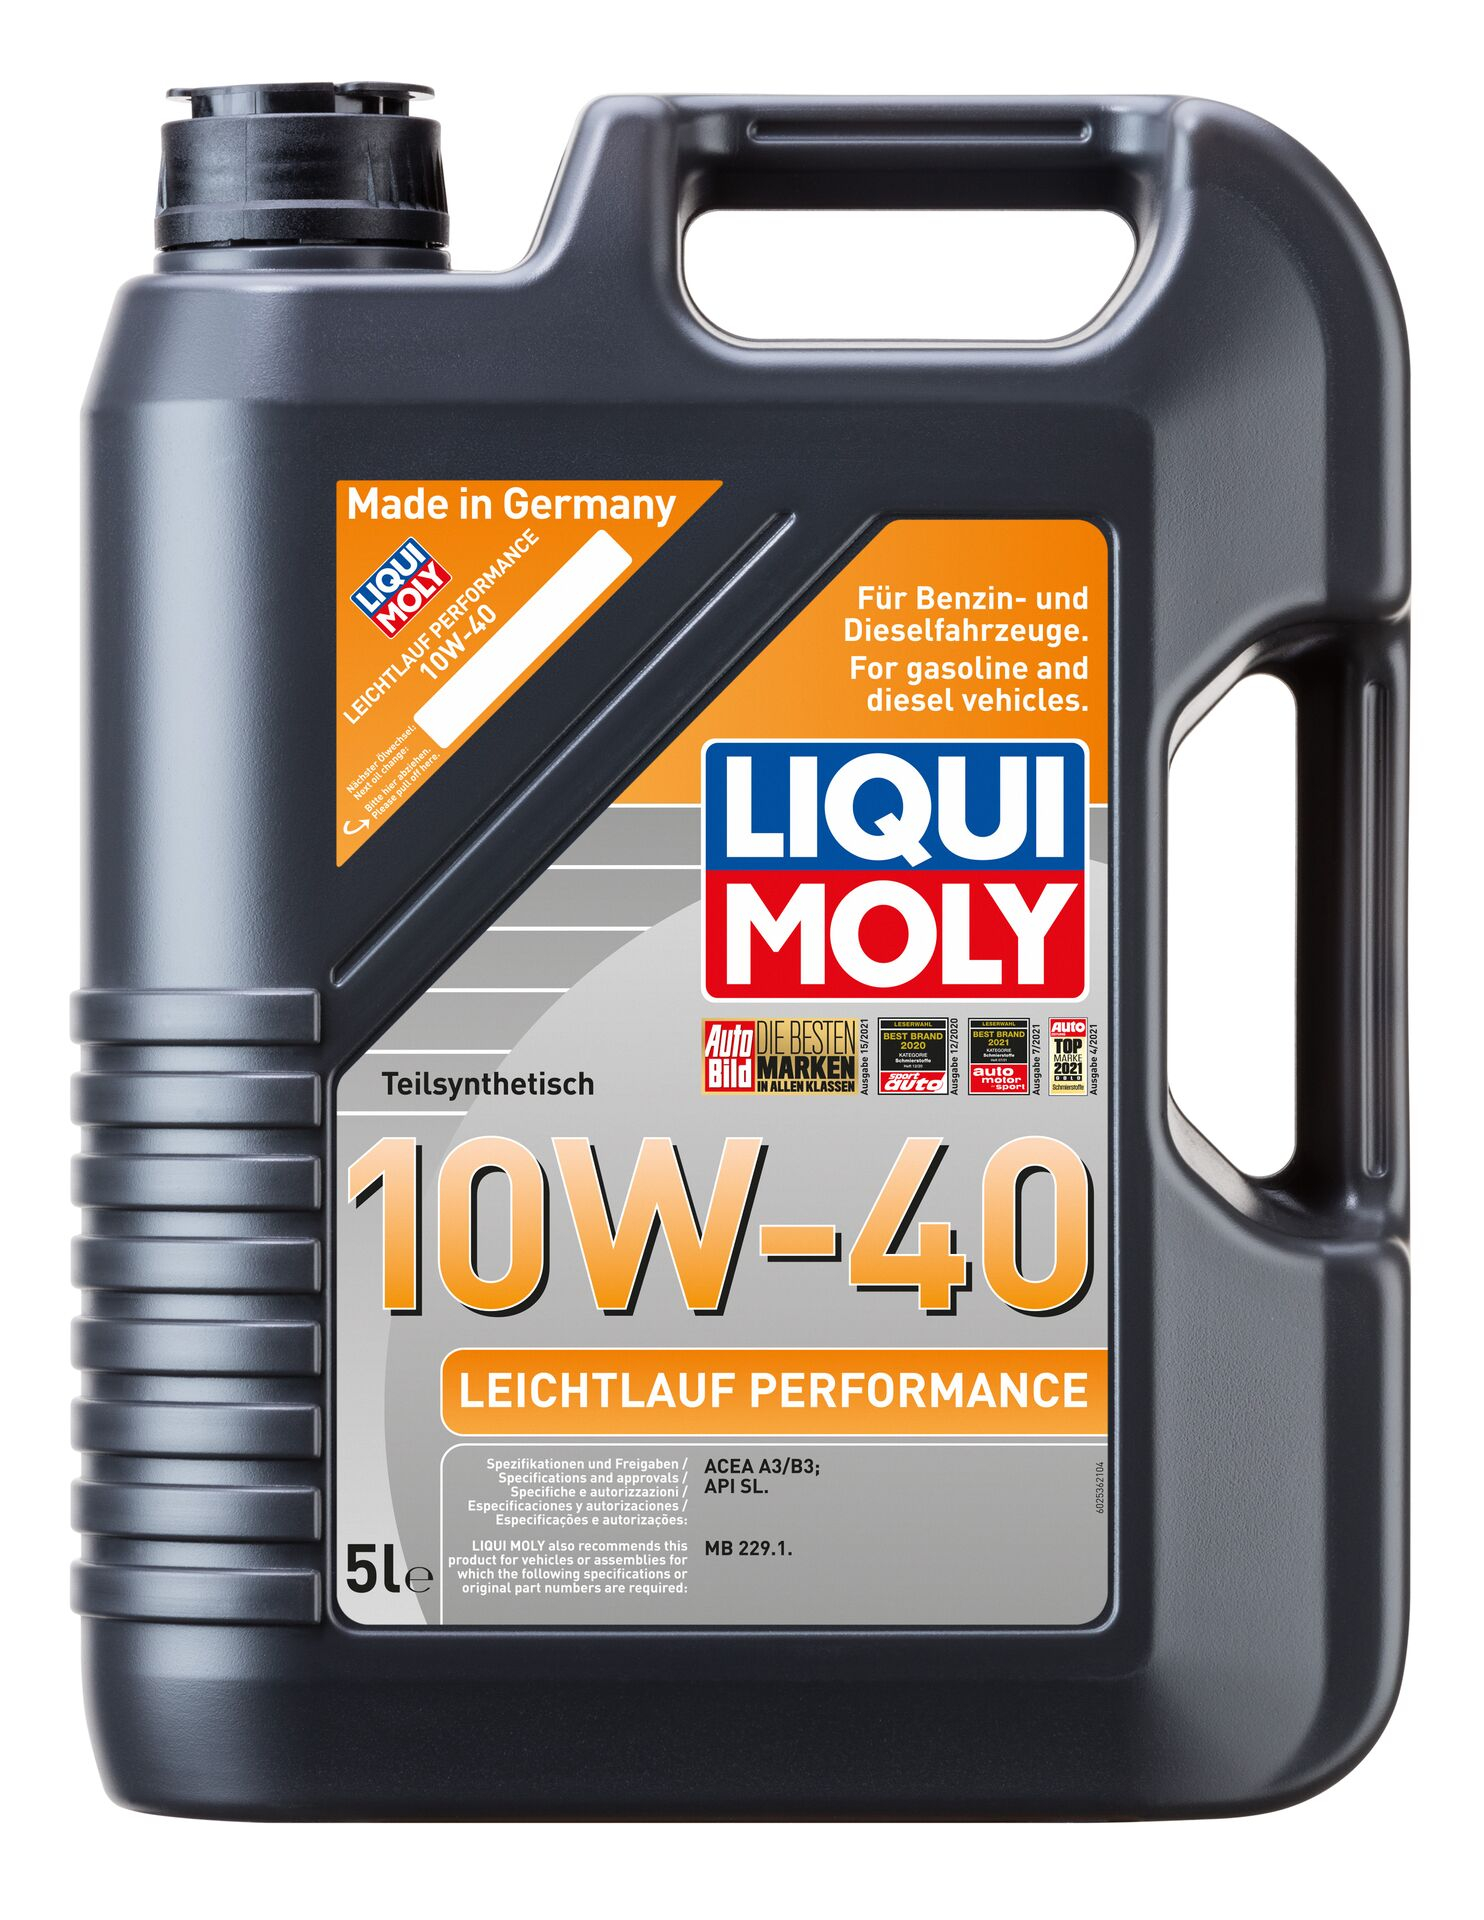 Liqui Moly Leichtlauf Performance 10W-40 2536 Motor Yağı 5 L